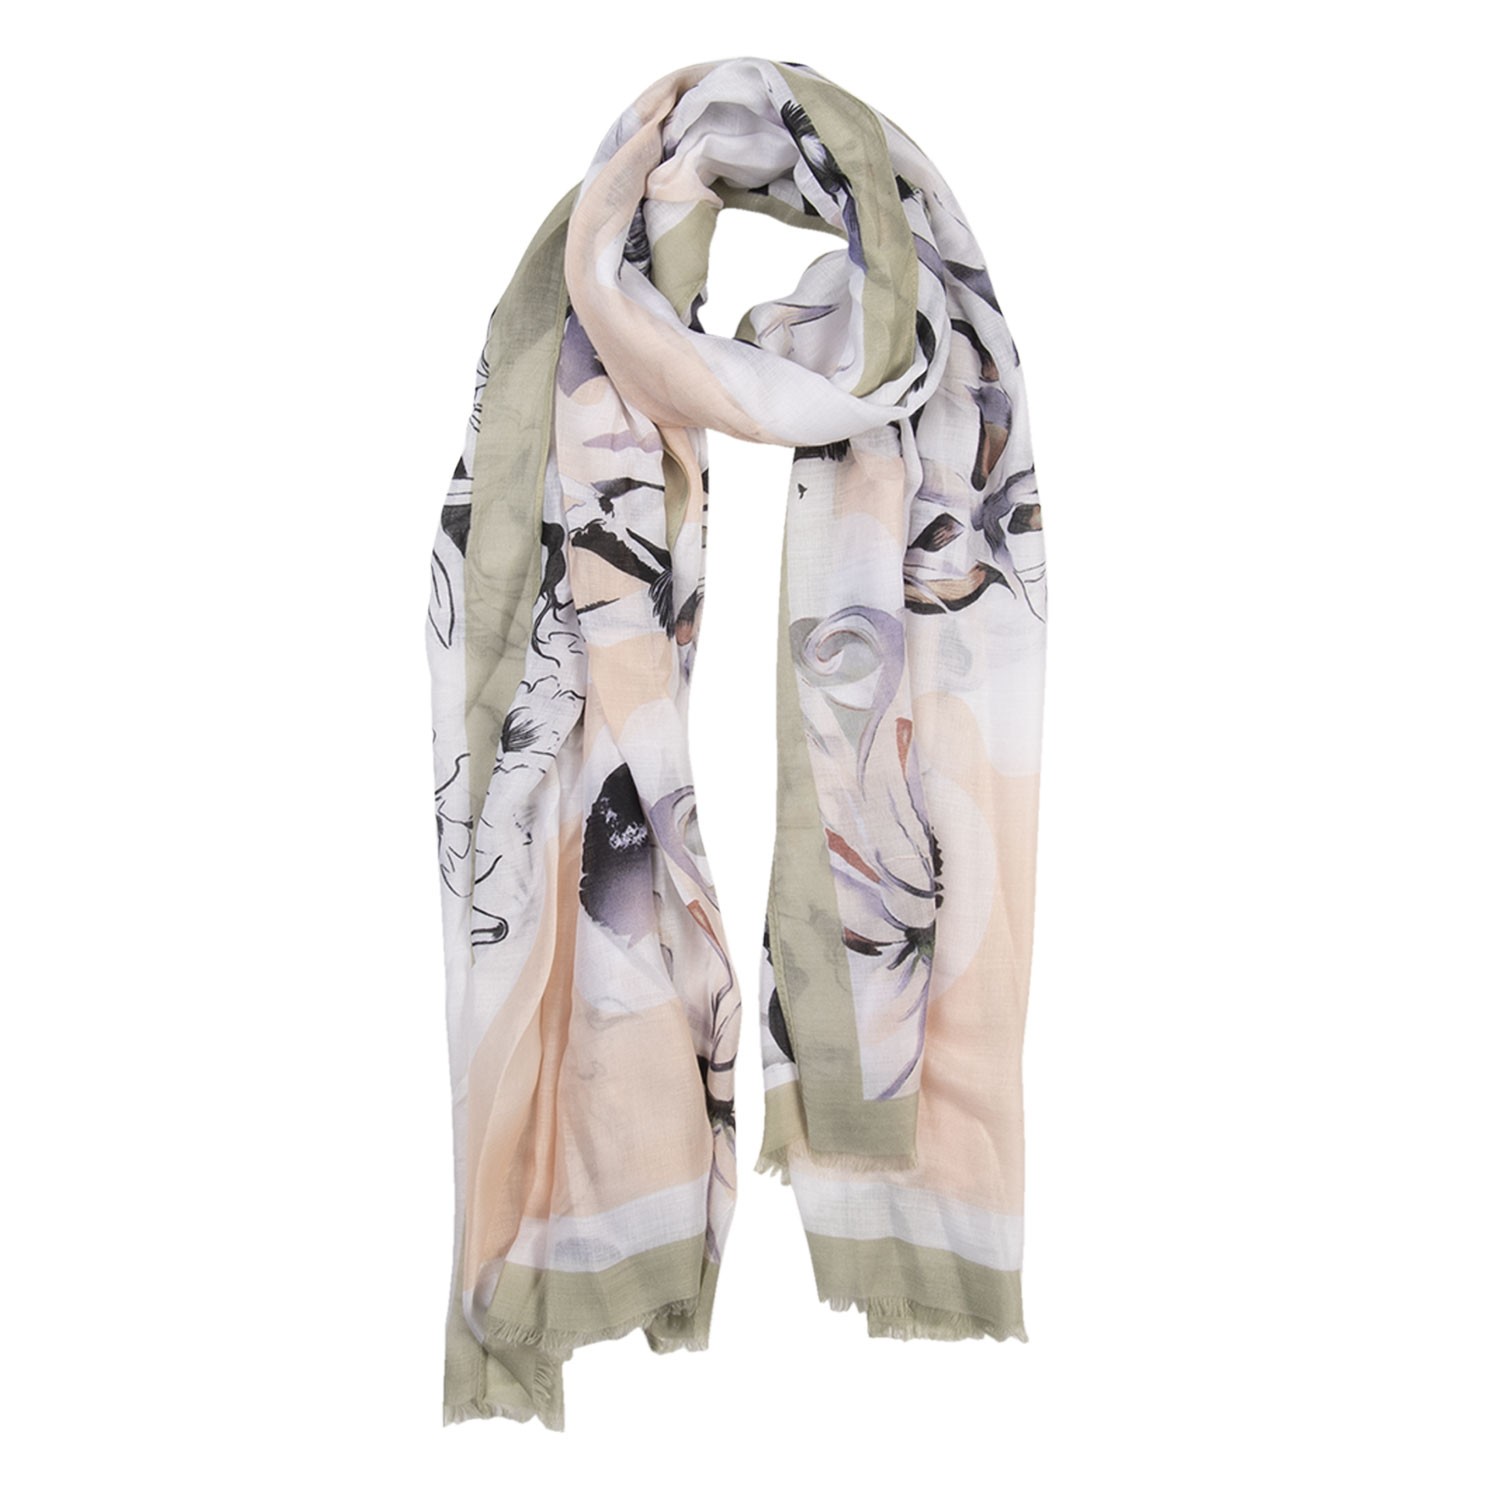 Barevný šátek s motivem květin a třásněmi - 85*180 cm Clayre & Eef